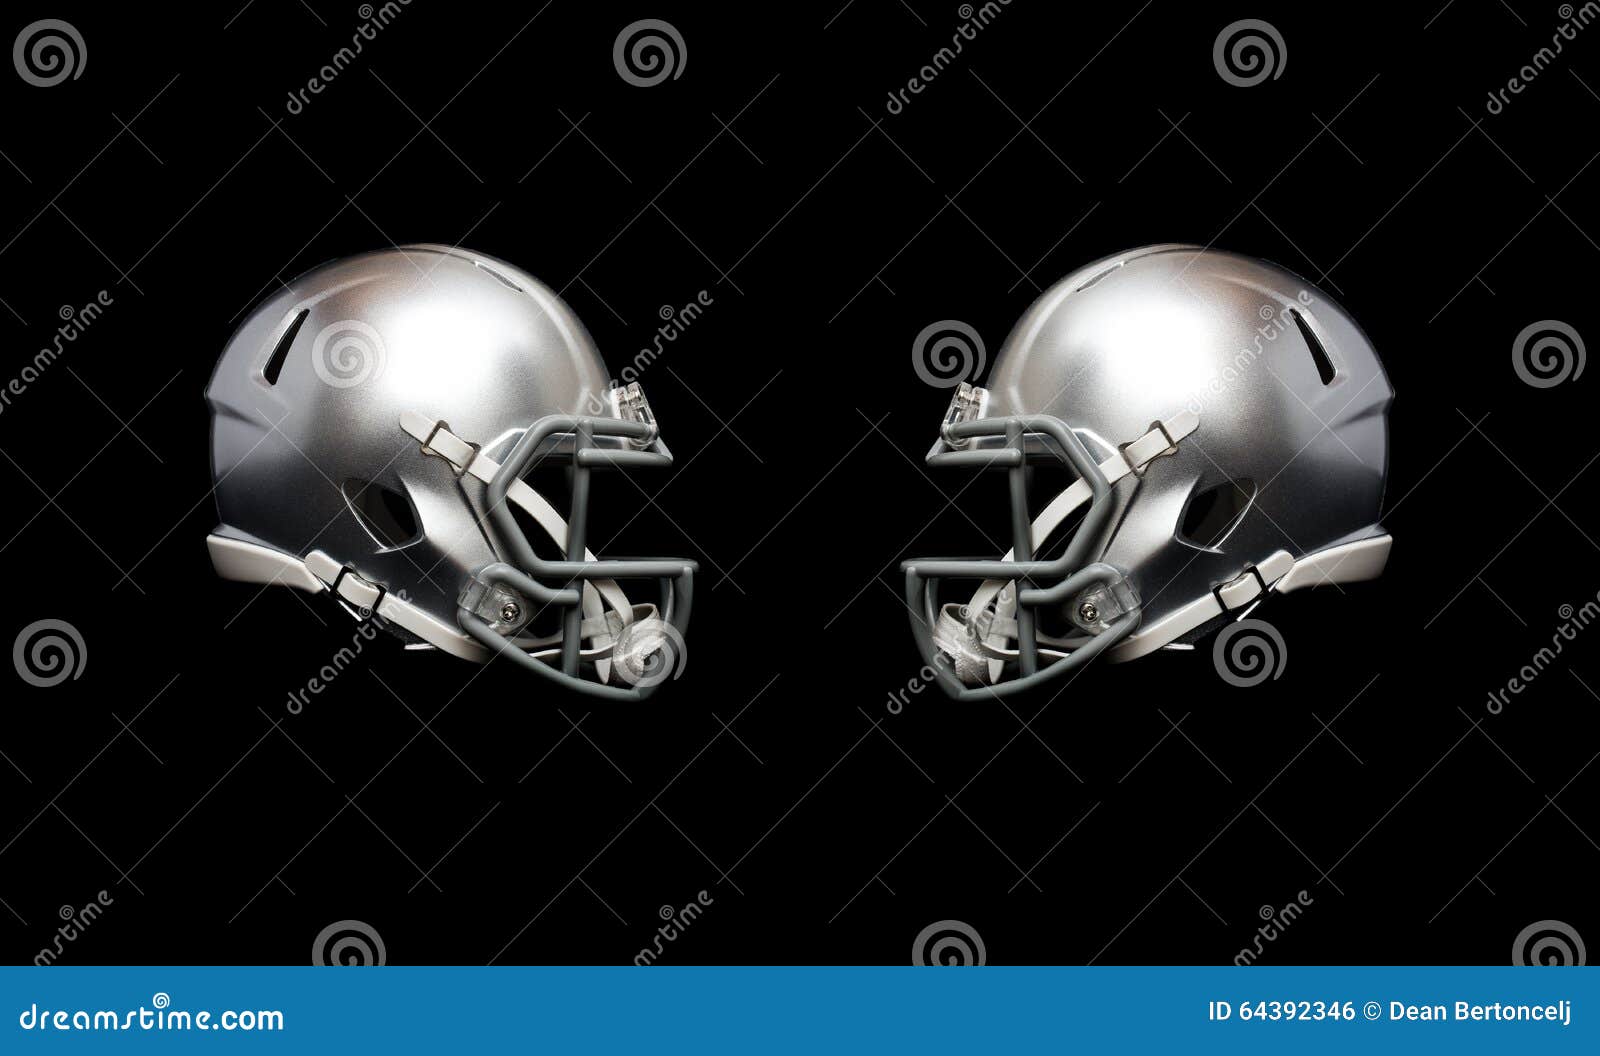 American football helmet stock photo. Image of pair, gridiron - 64392346